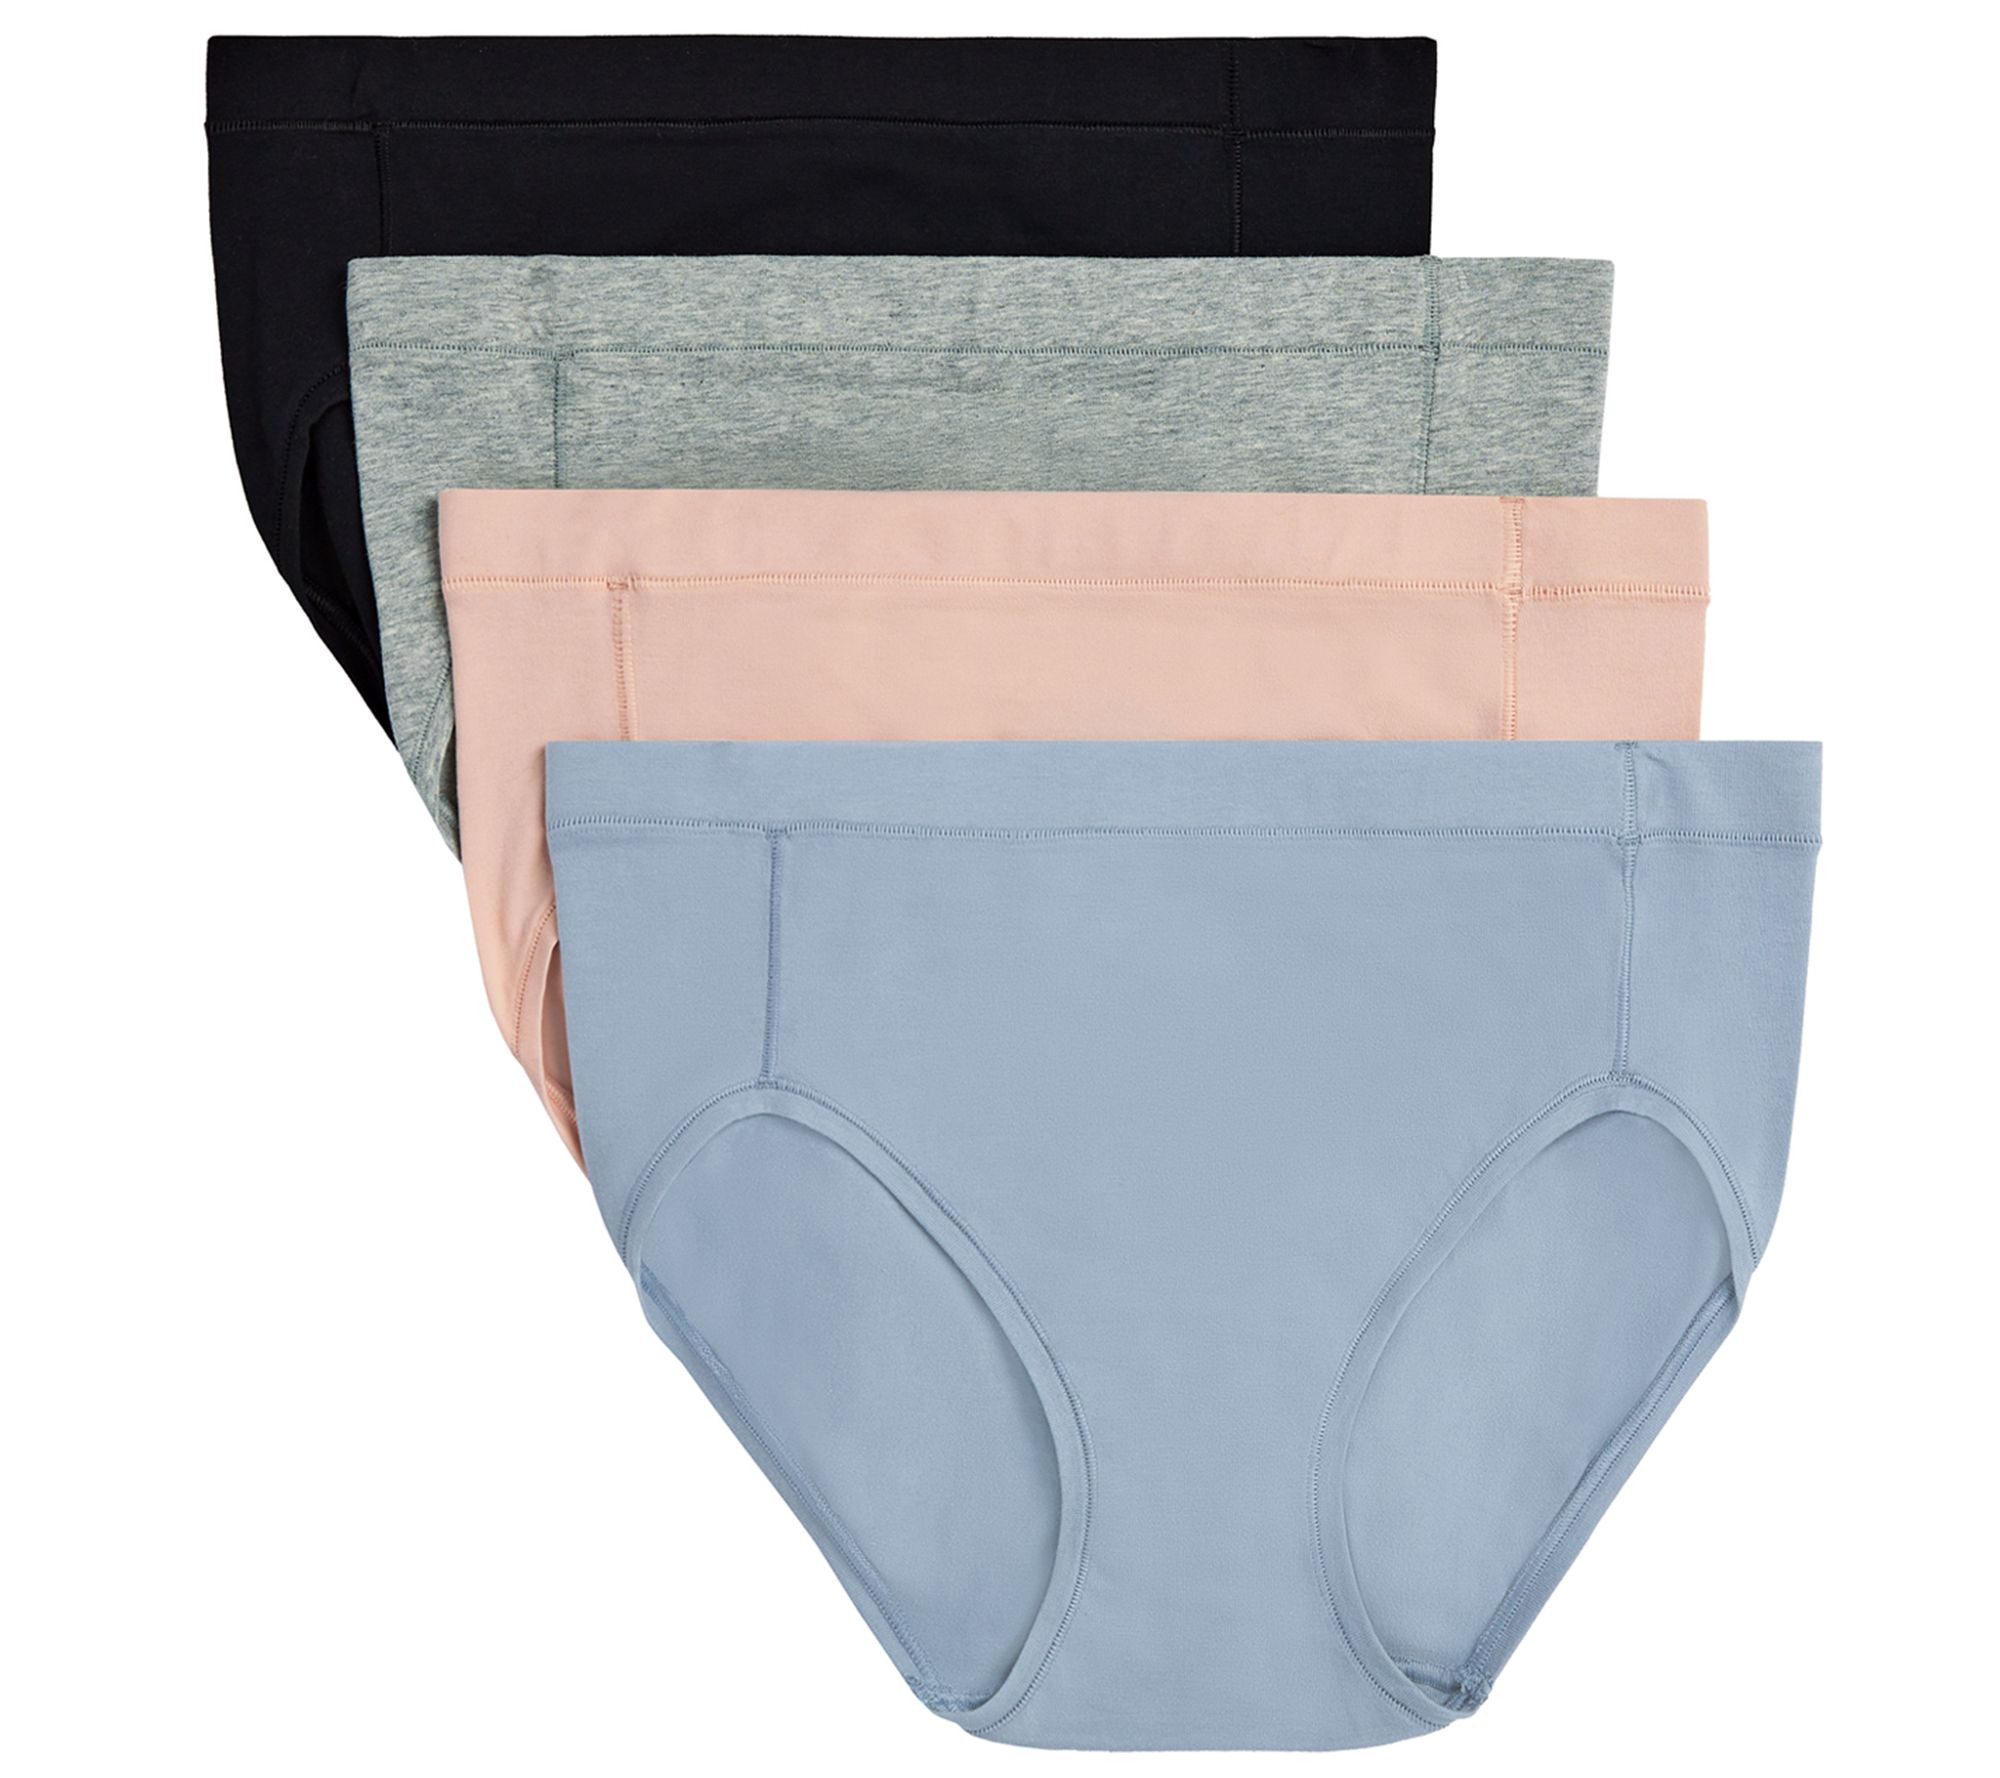 Smart Pants Undies for iPhone 4/4s/5 ,Underwear Case for iPhone